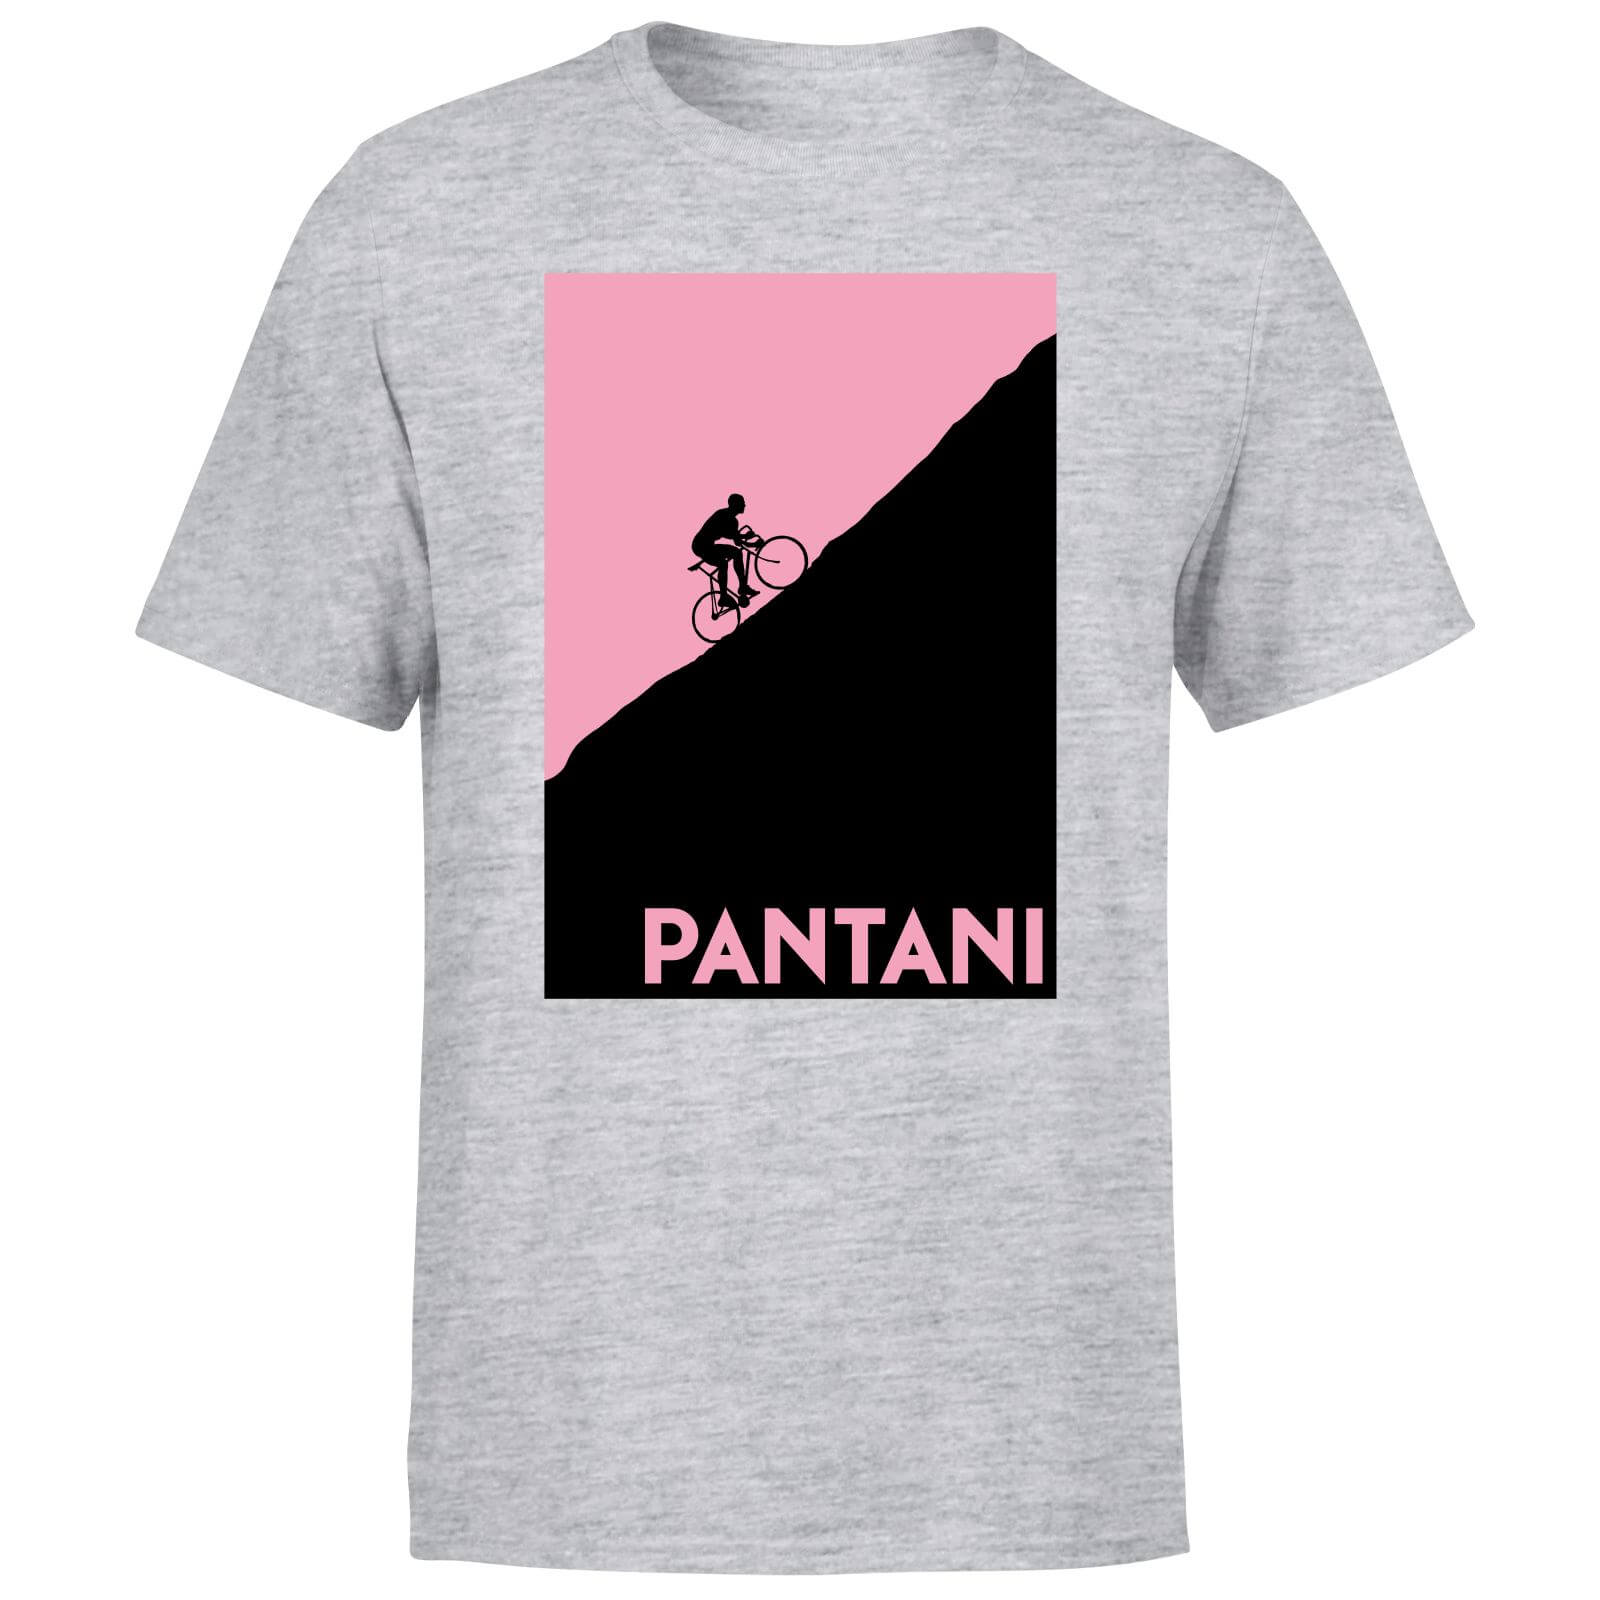 Pantani Men's T-Shirt - Grey - S - Grey